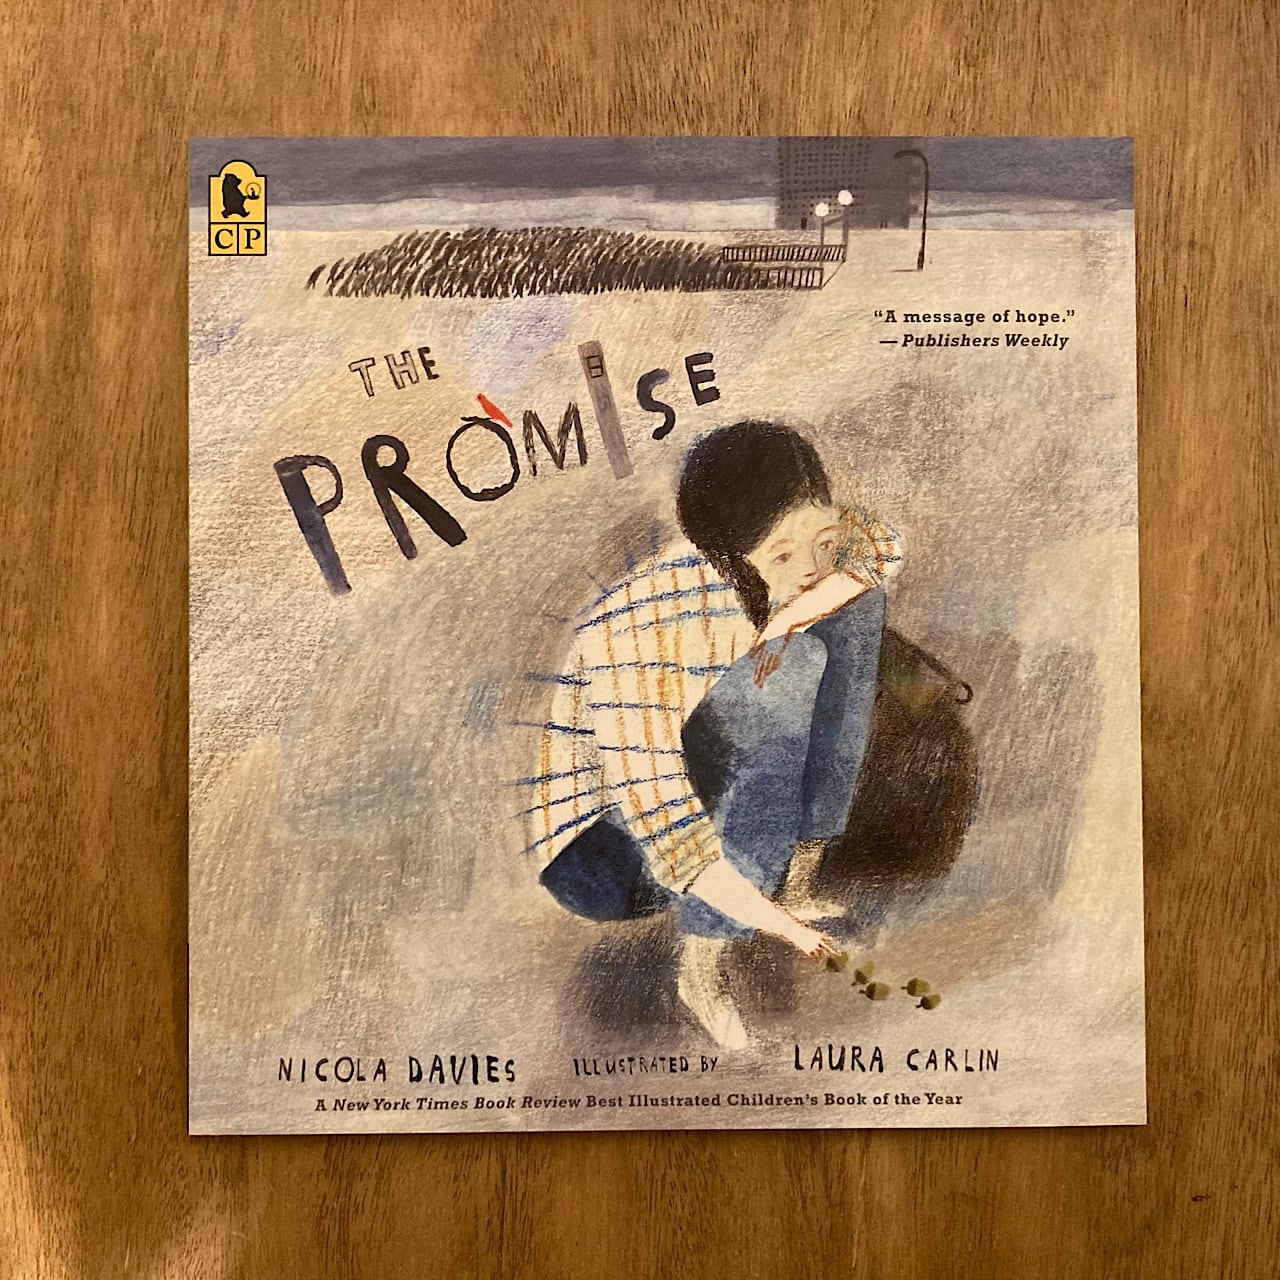 The Promise | 素敵な洋書の絵本のお店 Read Leaf Books